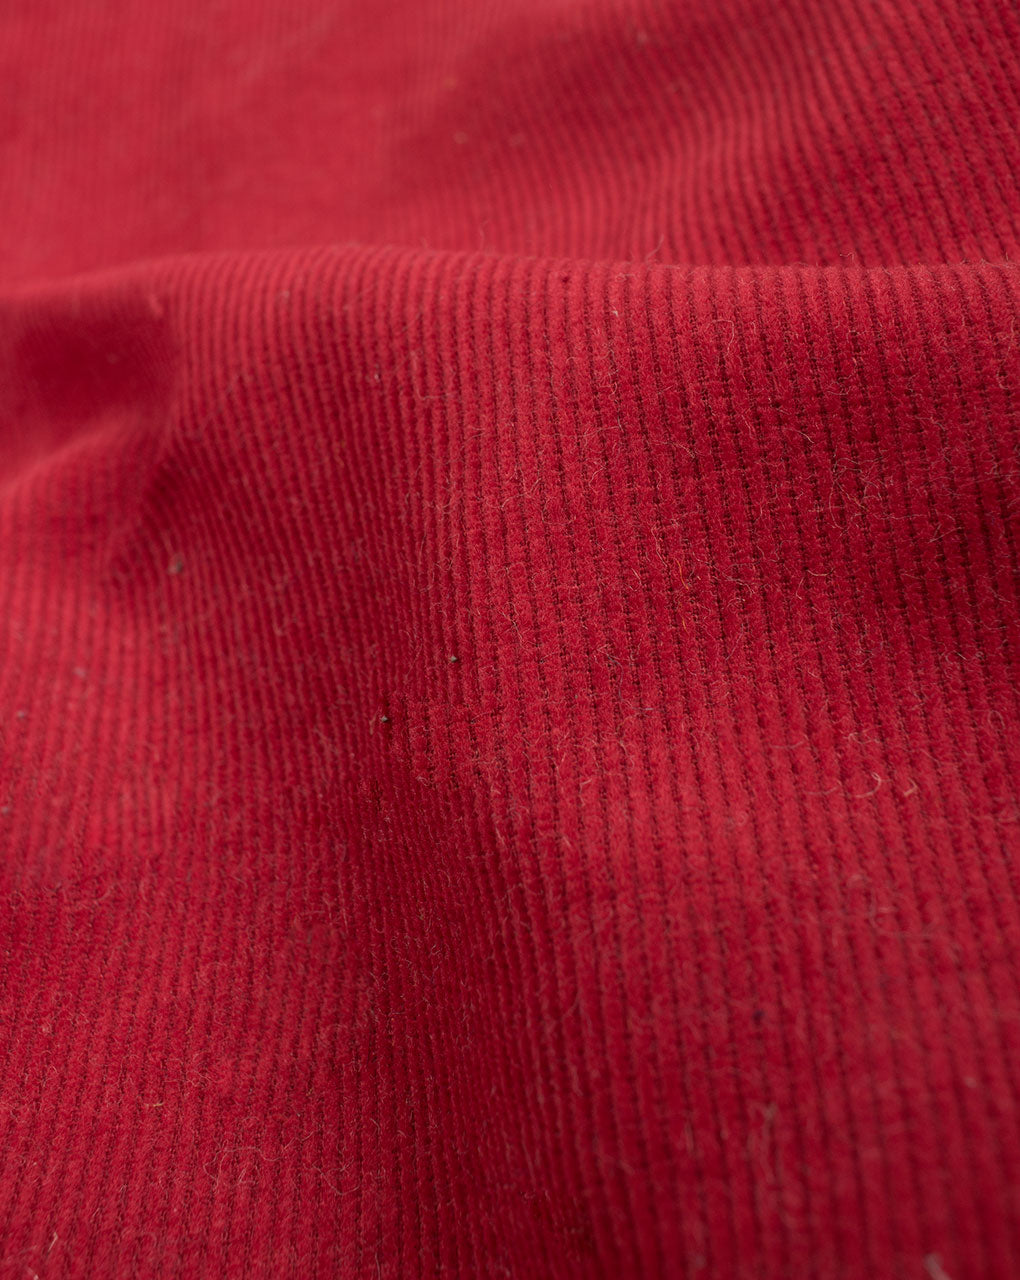 Red Plain Corduroy Fabric - Fabriclore.com